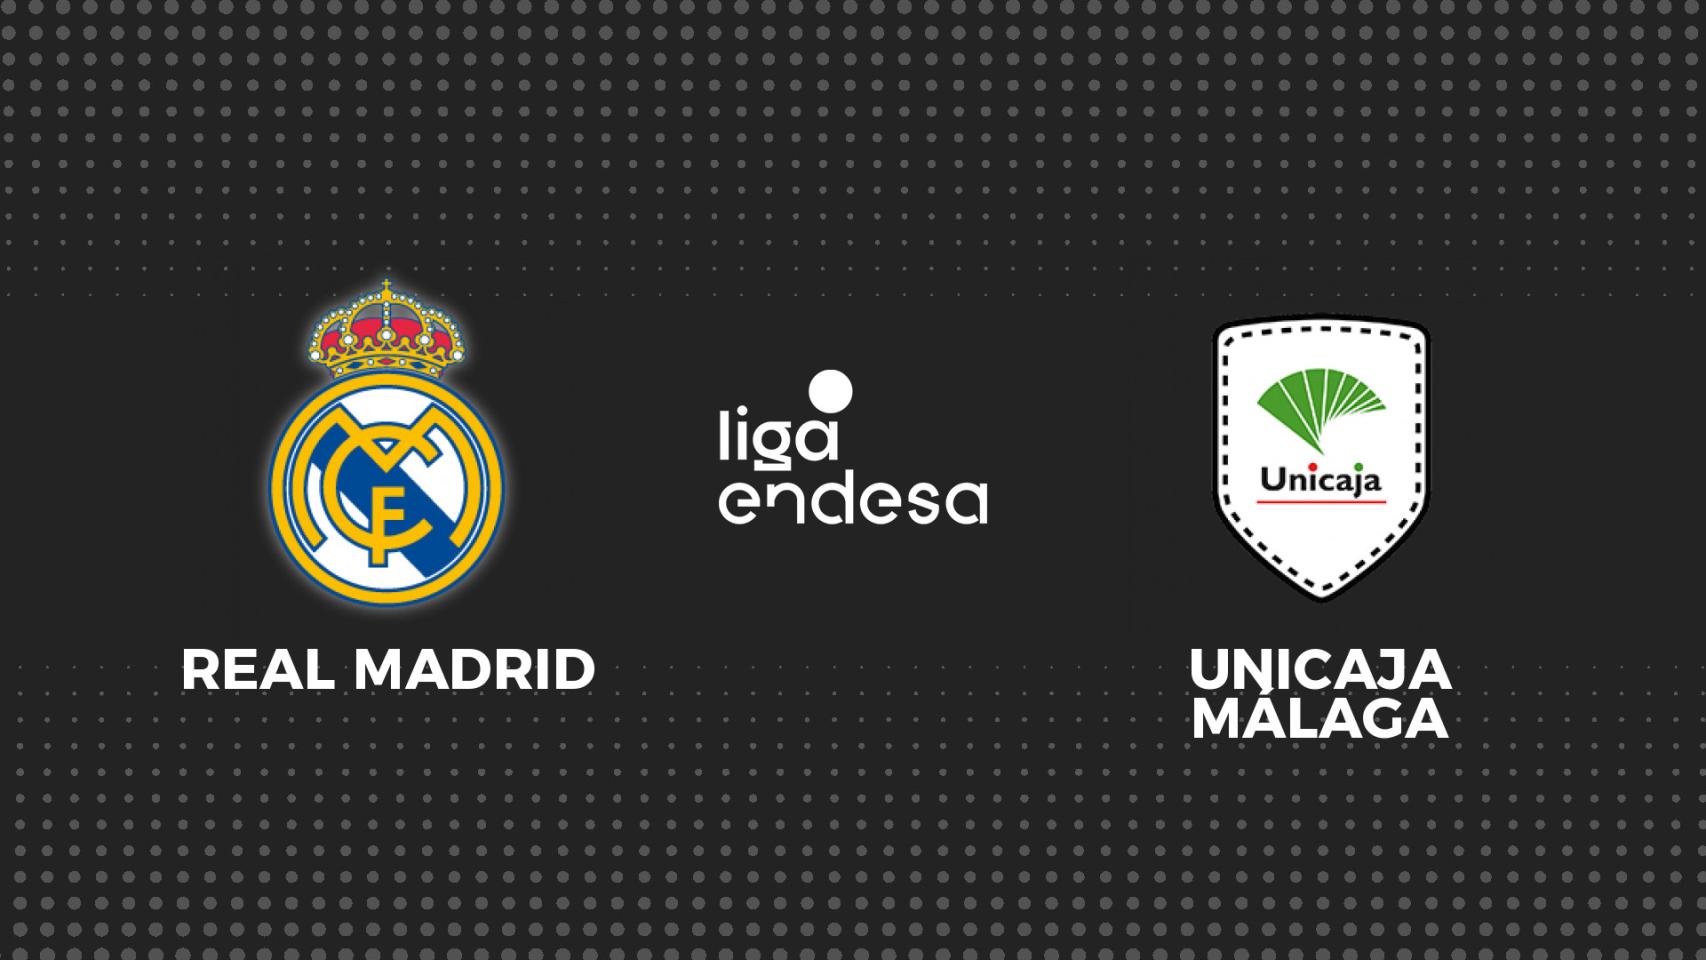 Real Madrid - Unicaja Málaga, baloncesto en directo